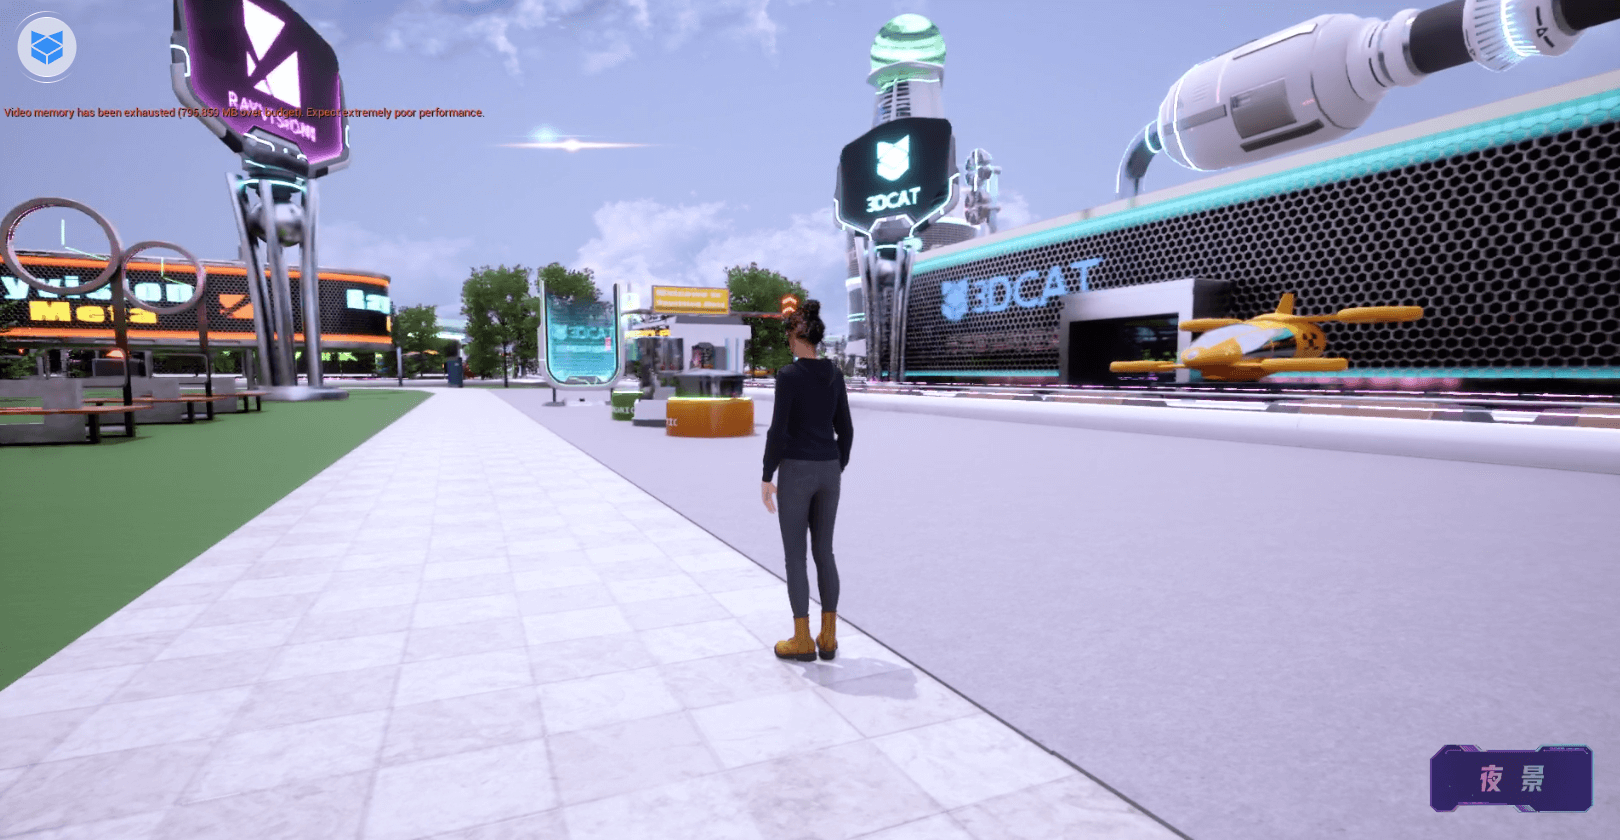 3DCAT元宇宙解决方案-虚拟云展厅